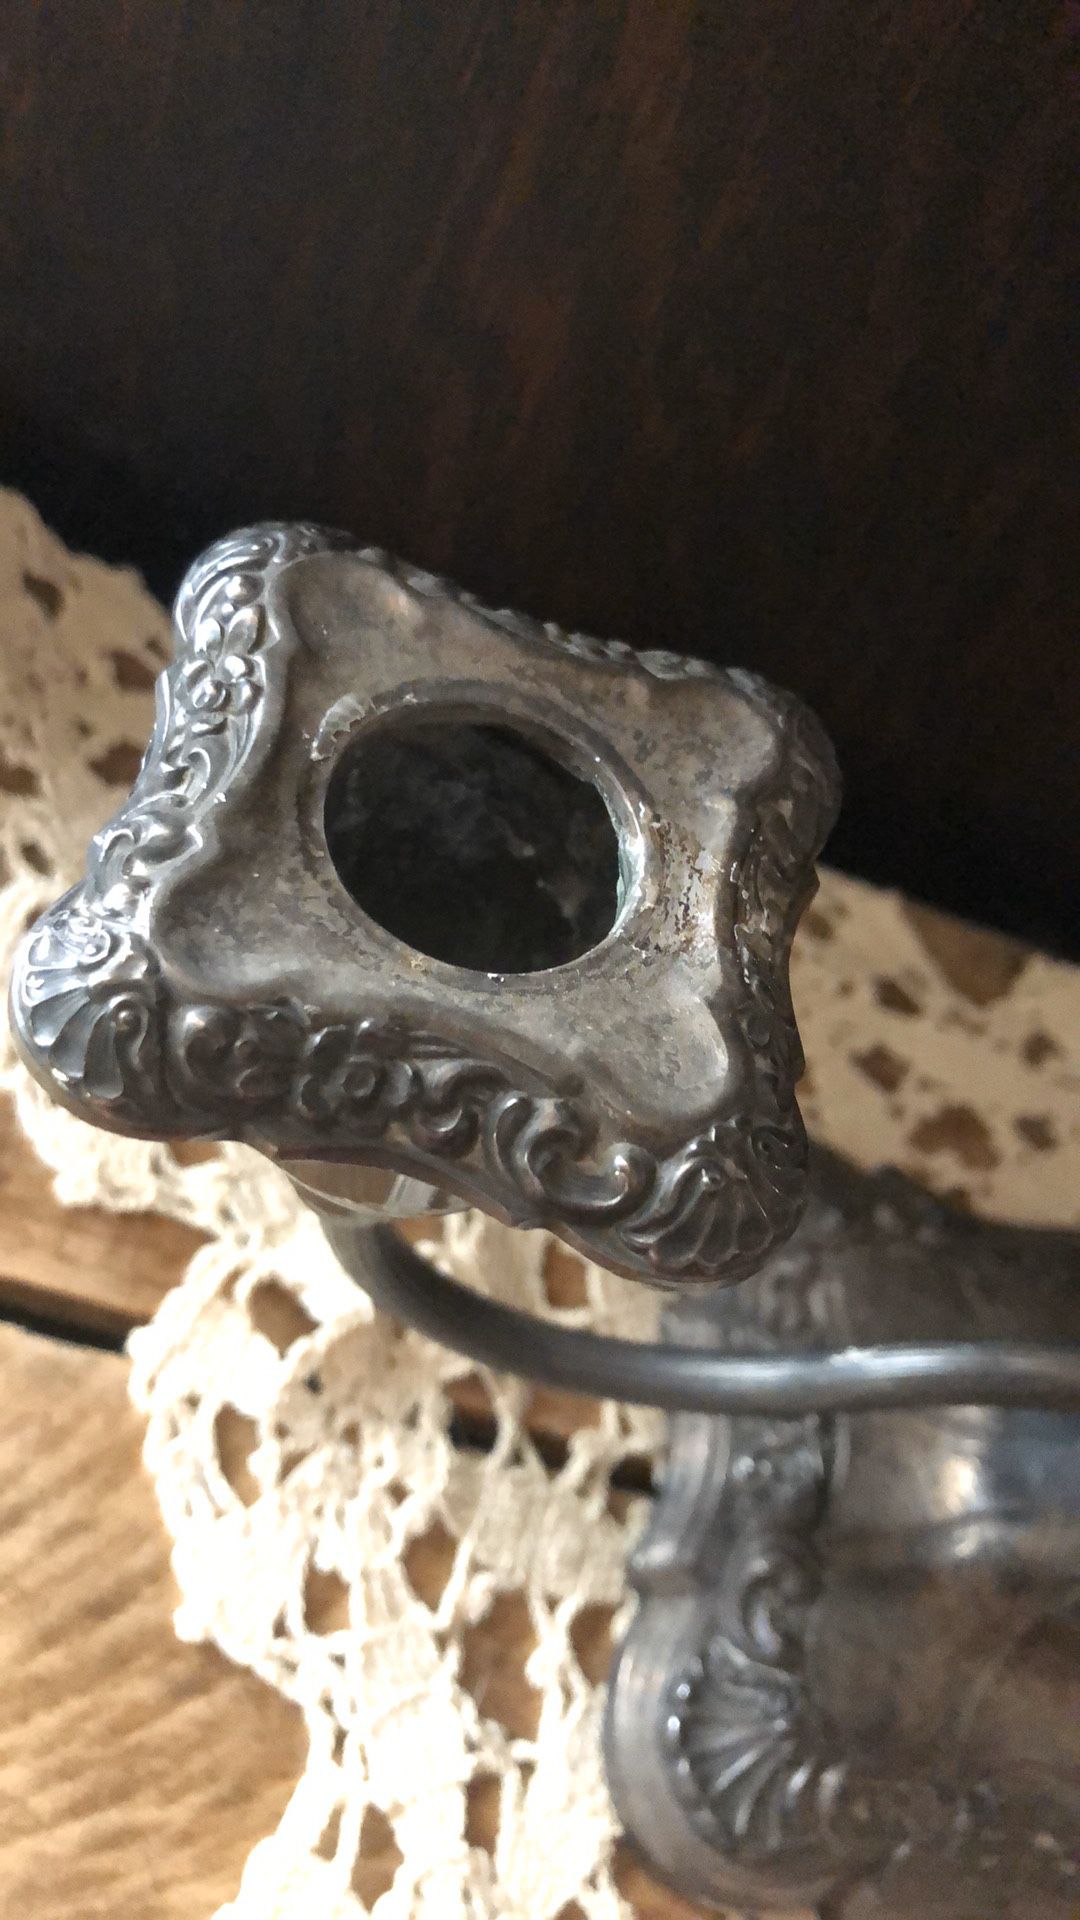 Antique silver candelabra